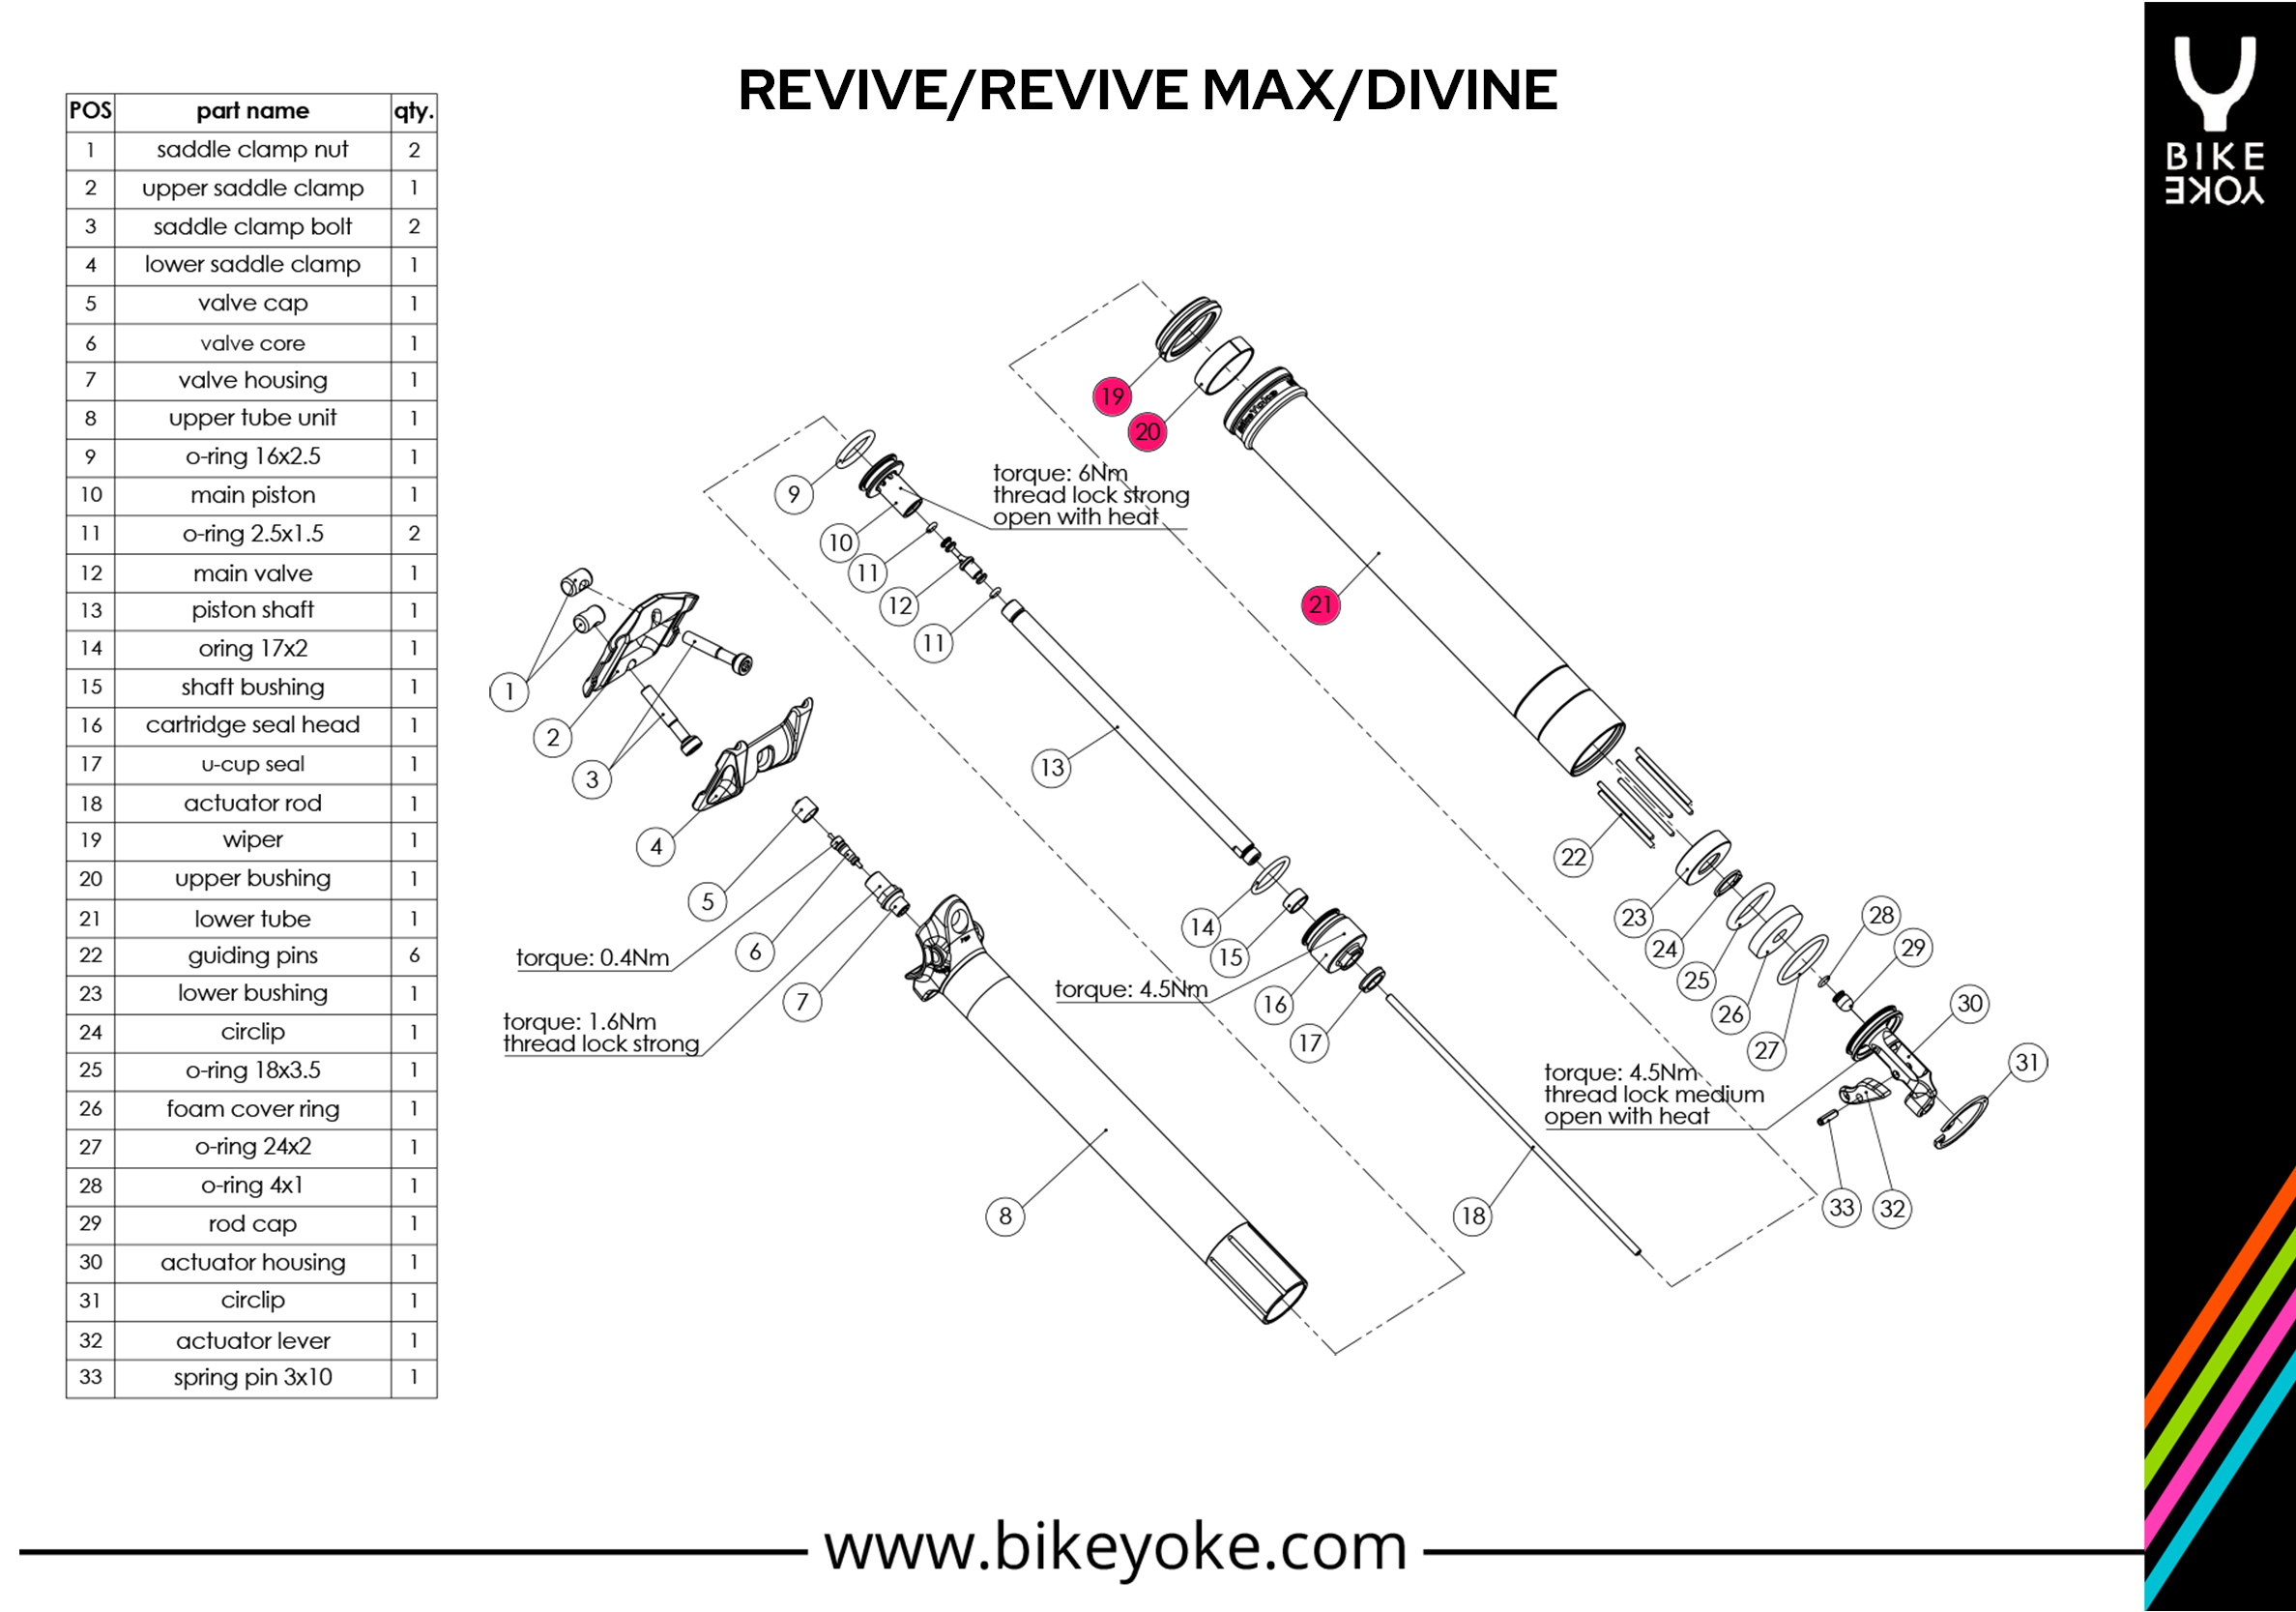 REVIVE / DIVINE - lower tube